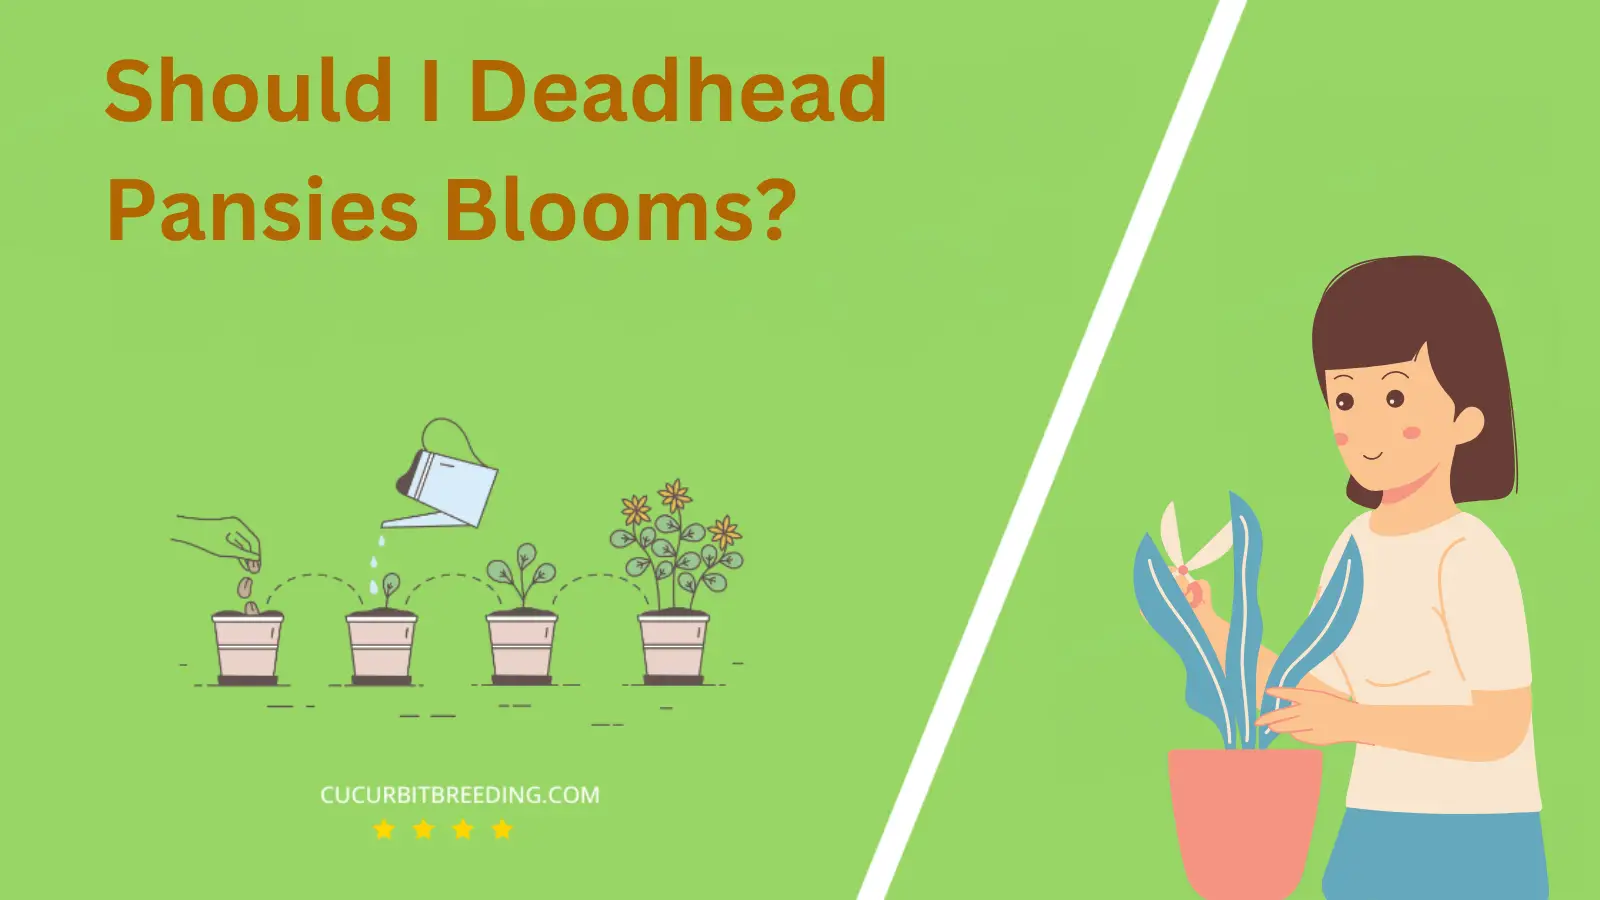 Should I Deadhead Pansies Blooms?